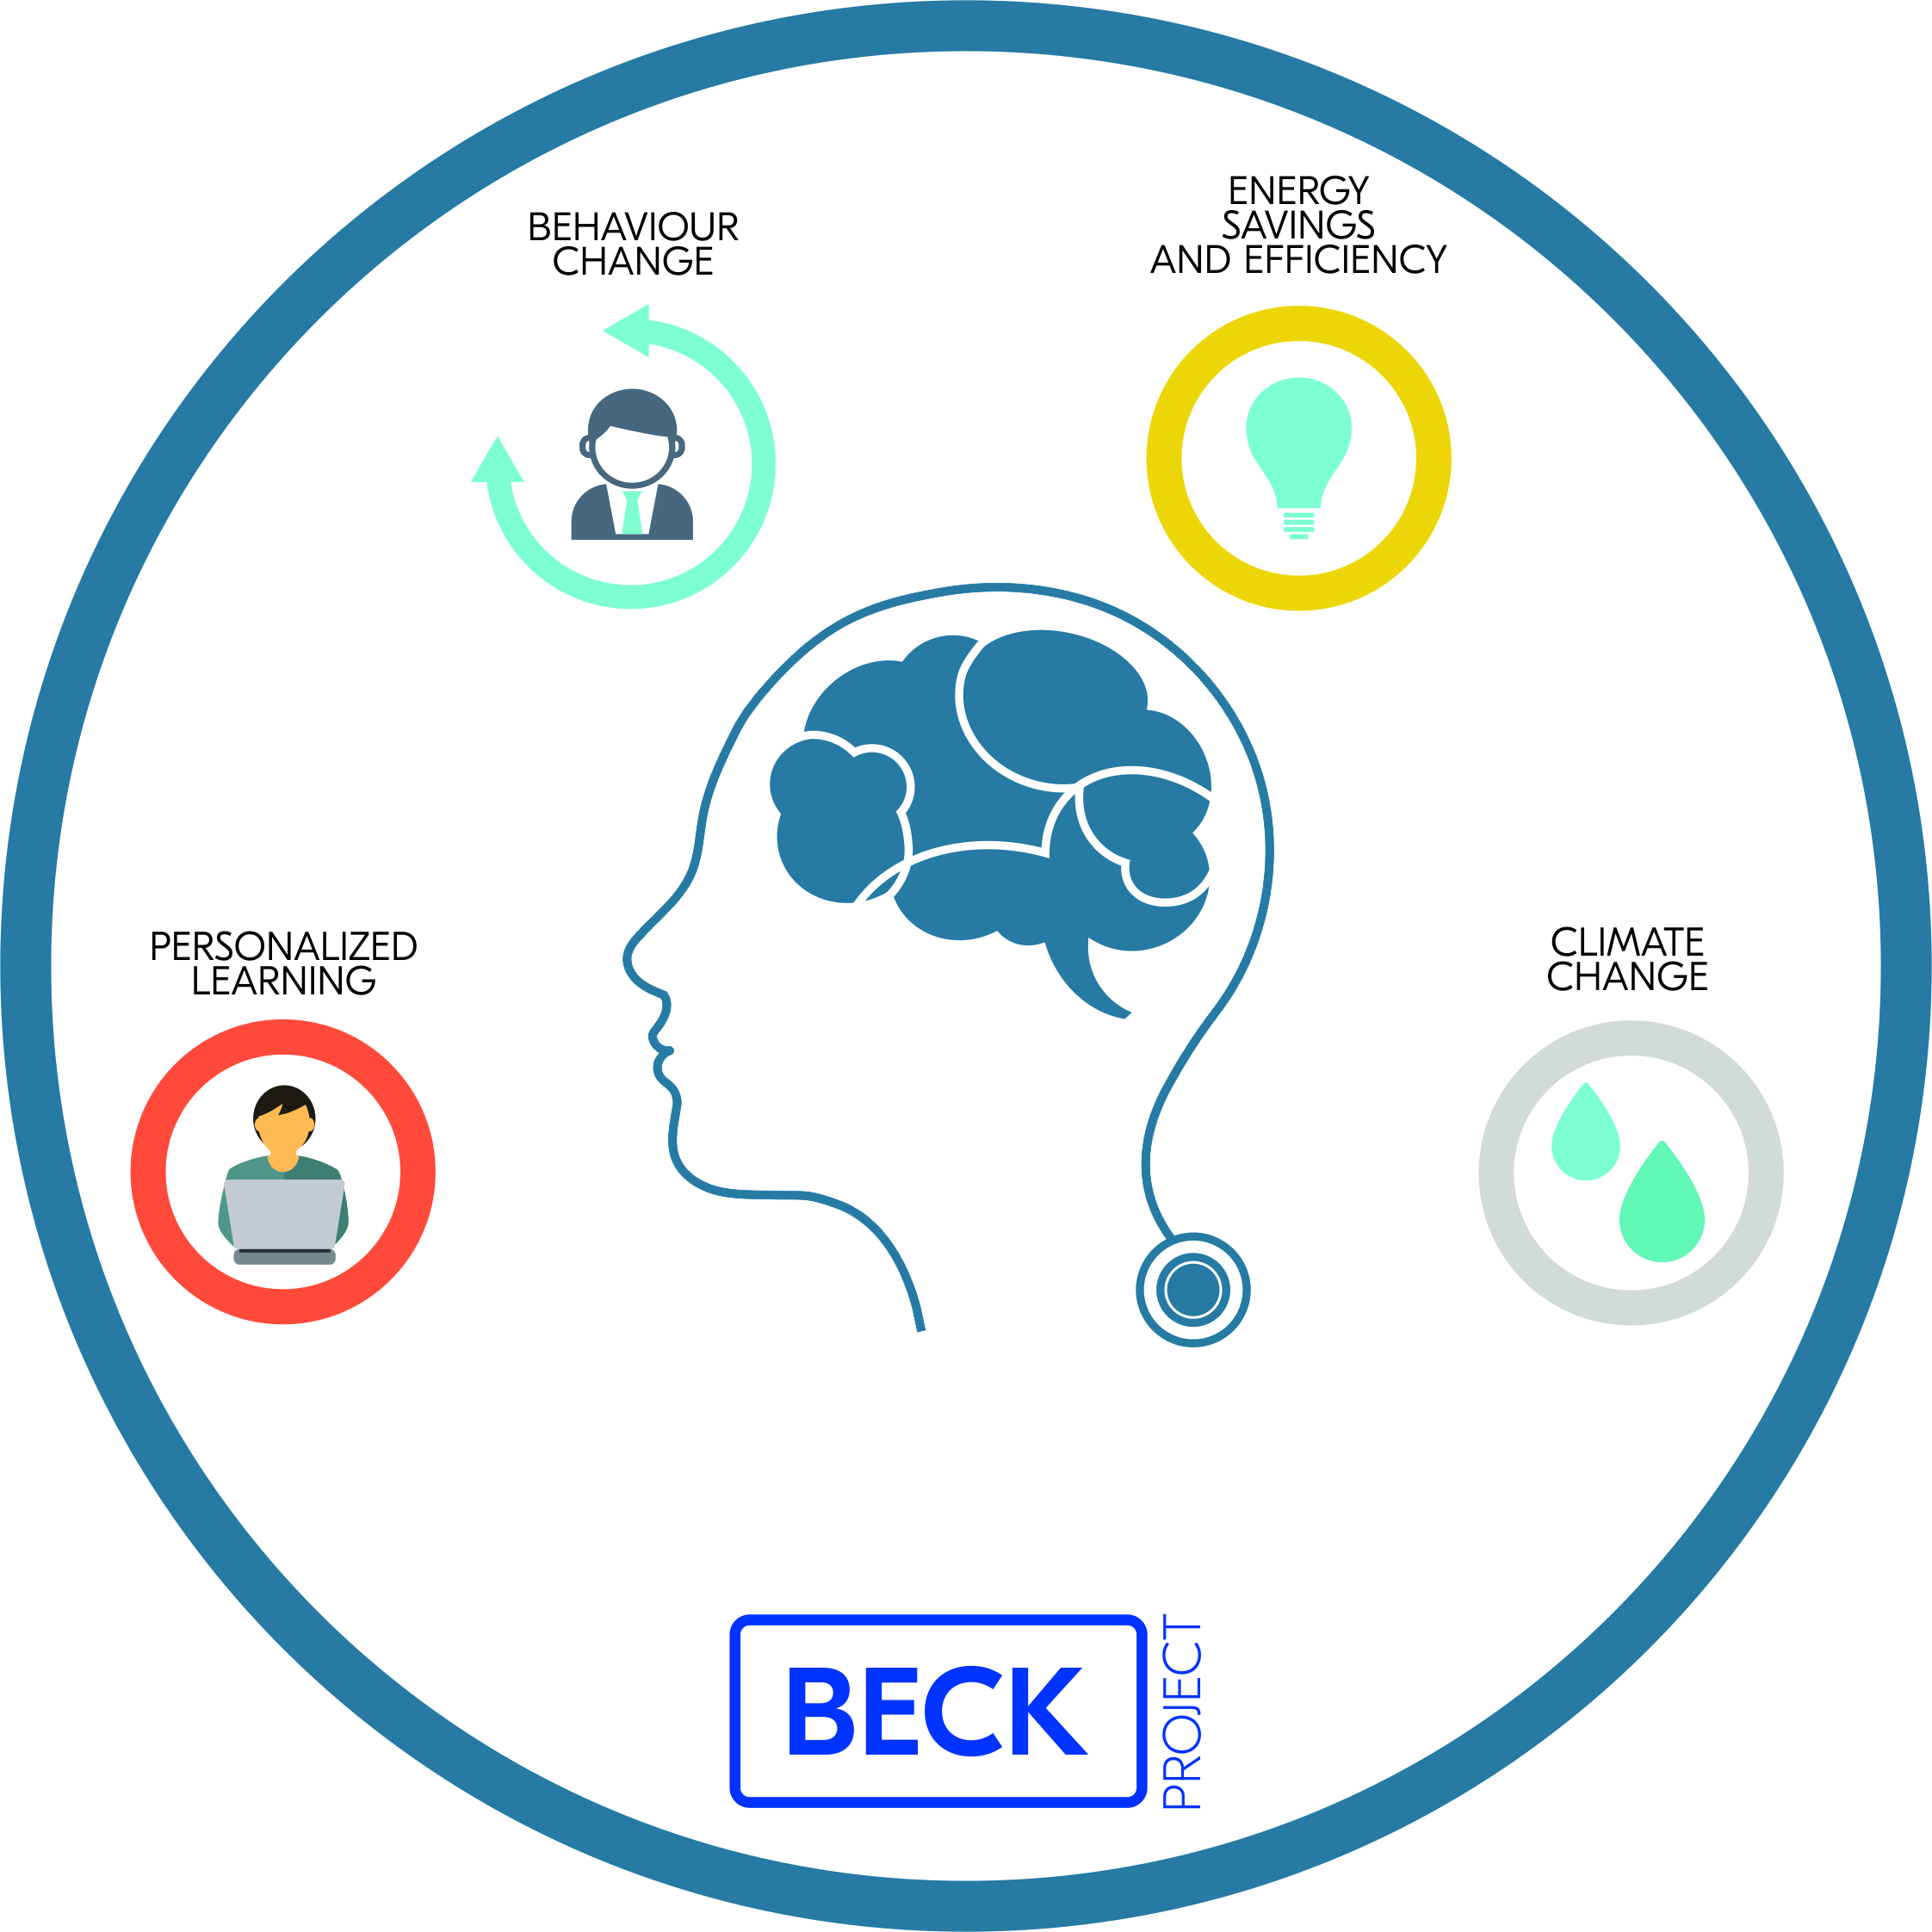 BECK Logo